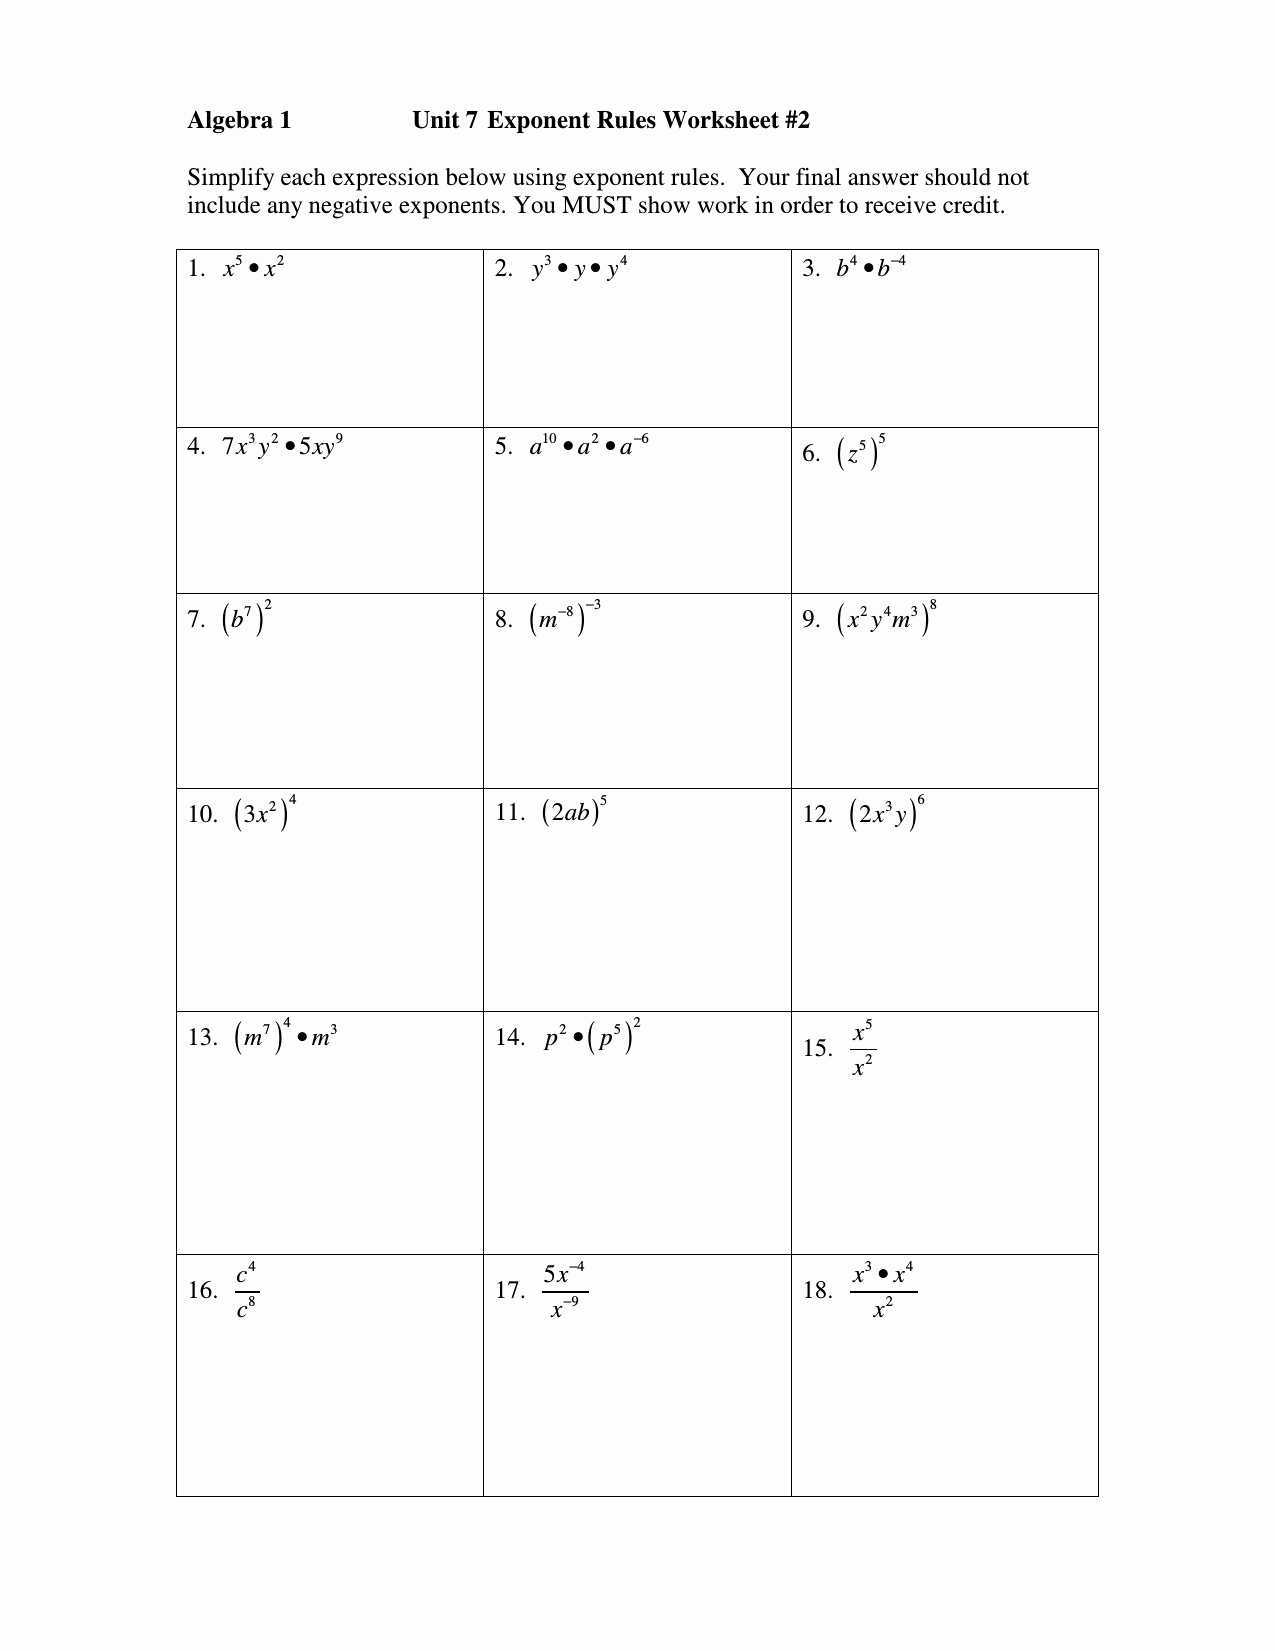 Properties Of Exponents Worksheet Beautiful Algebra 1 Unit 7 Exponent Rules Worksheet 2 Simplify Each